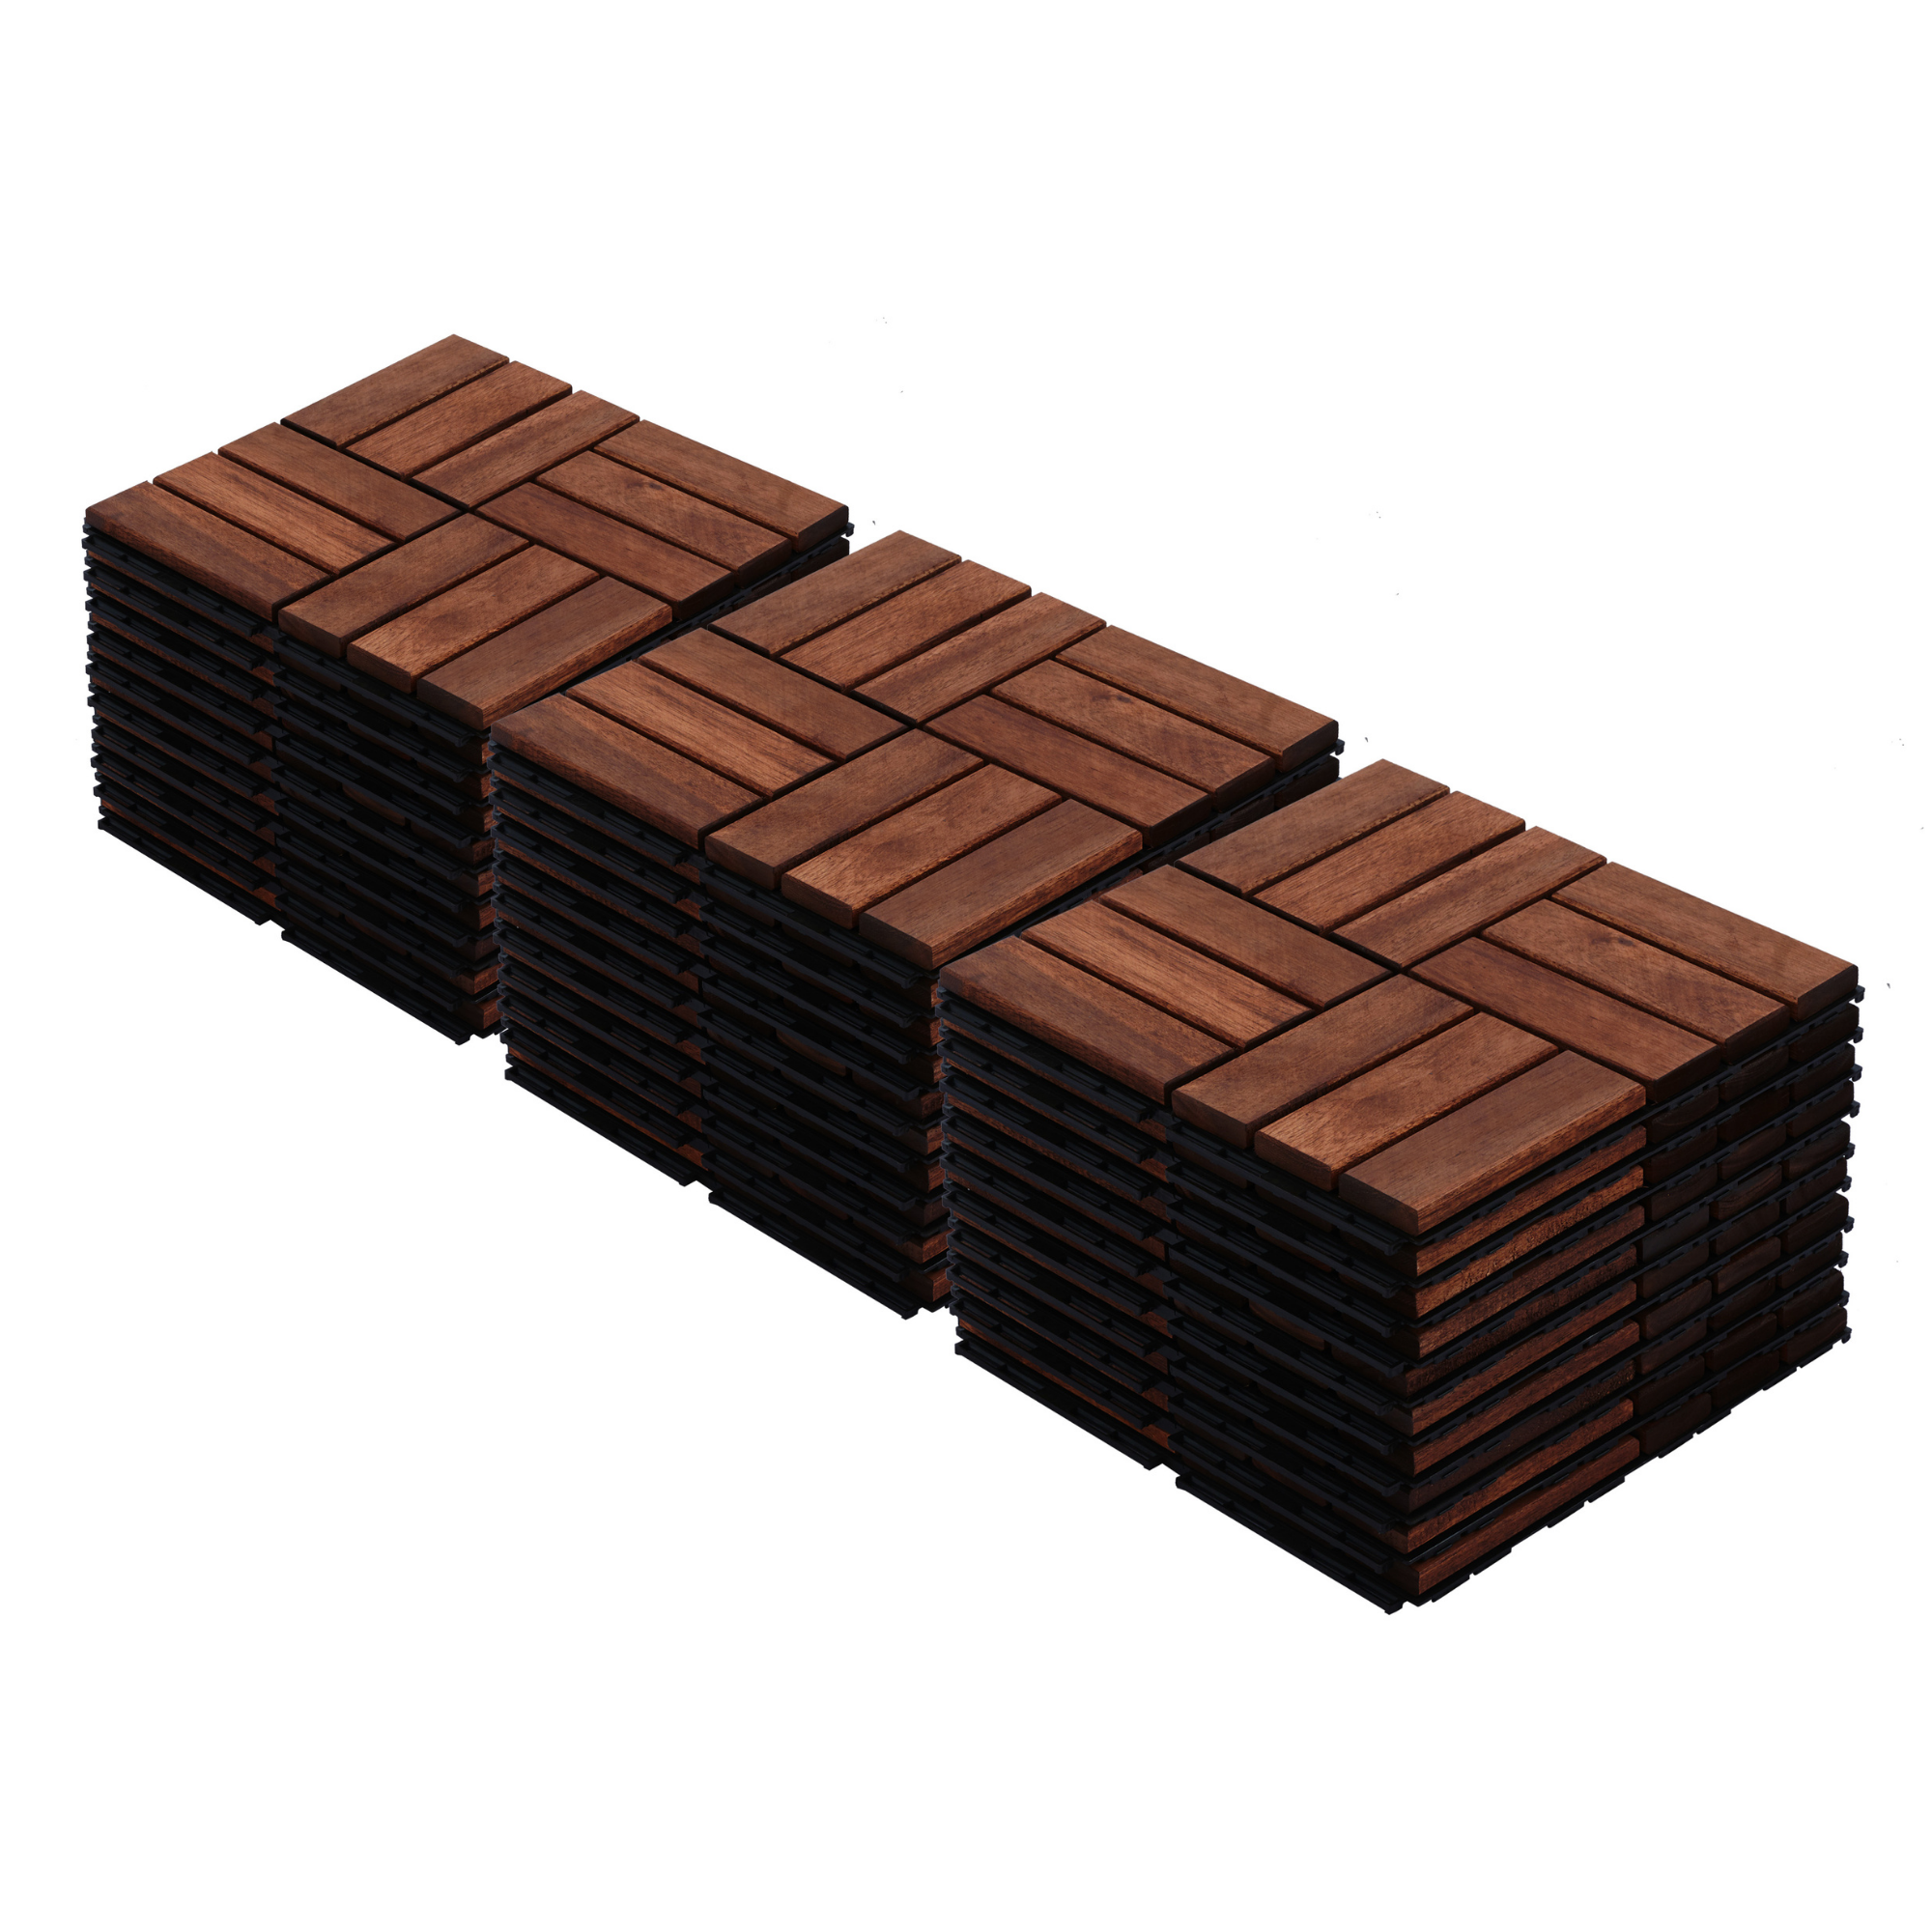 30 PCS Interlocking Deck Tiles 12" x 12" Acacia Hardwood Outdoor Flooring for Patio